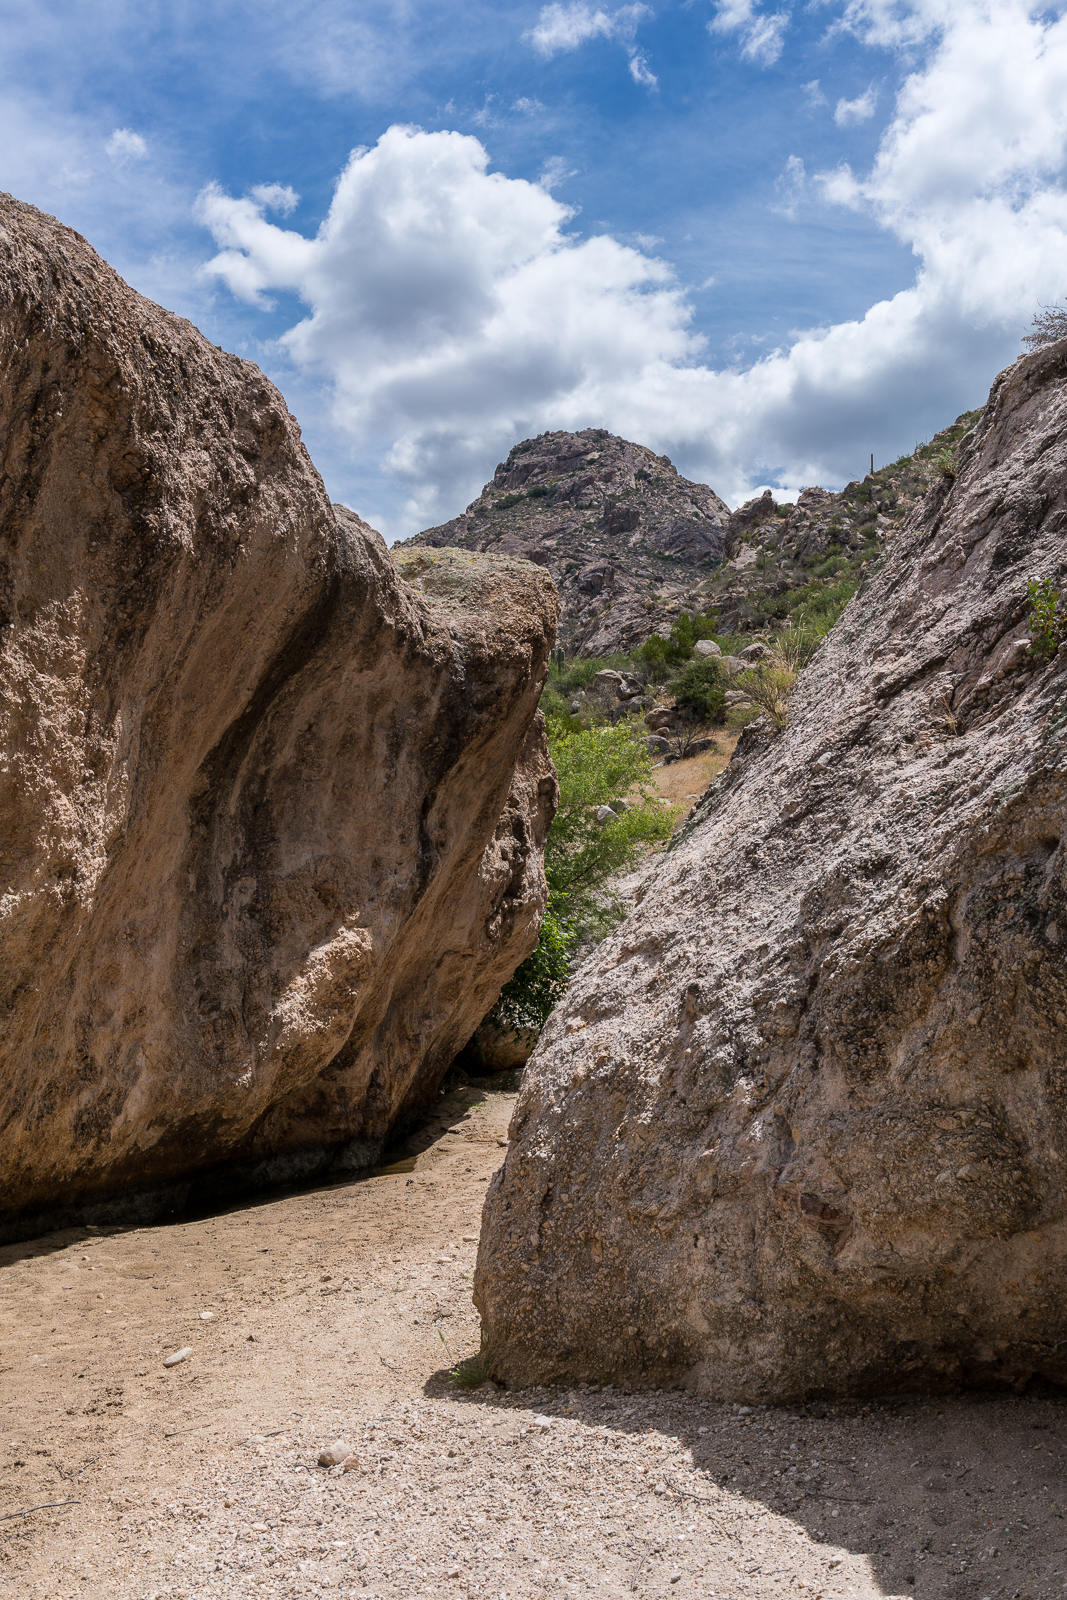 In Romero Canyon below Bressia Rock. May 2016.